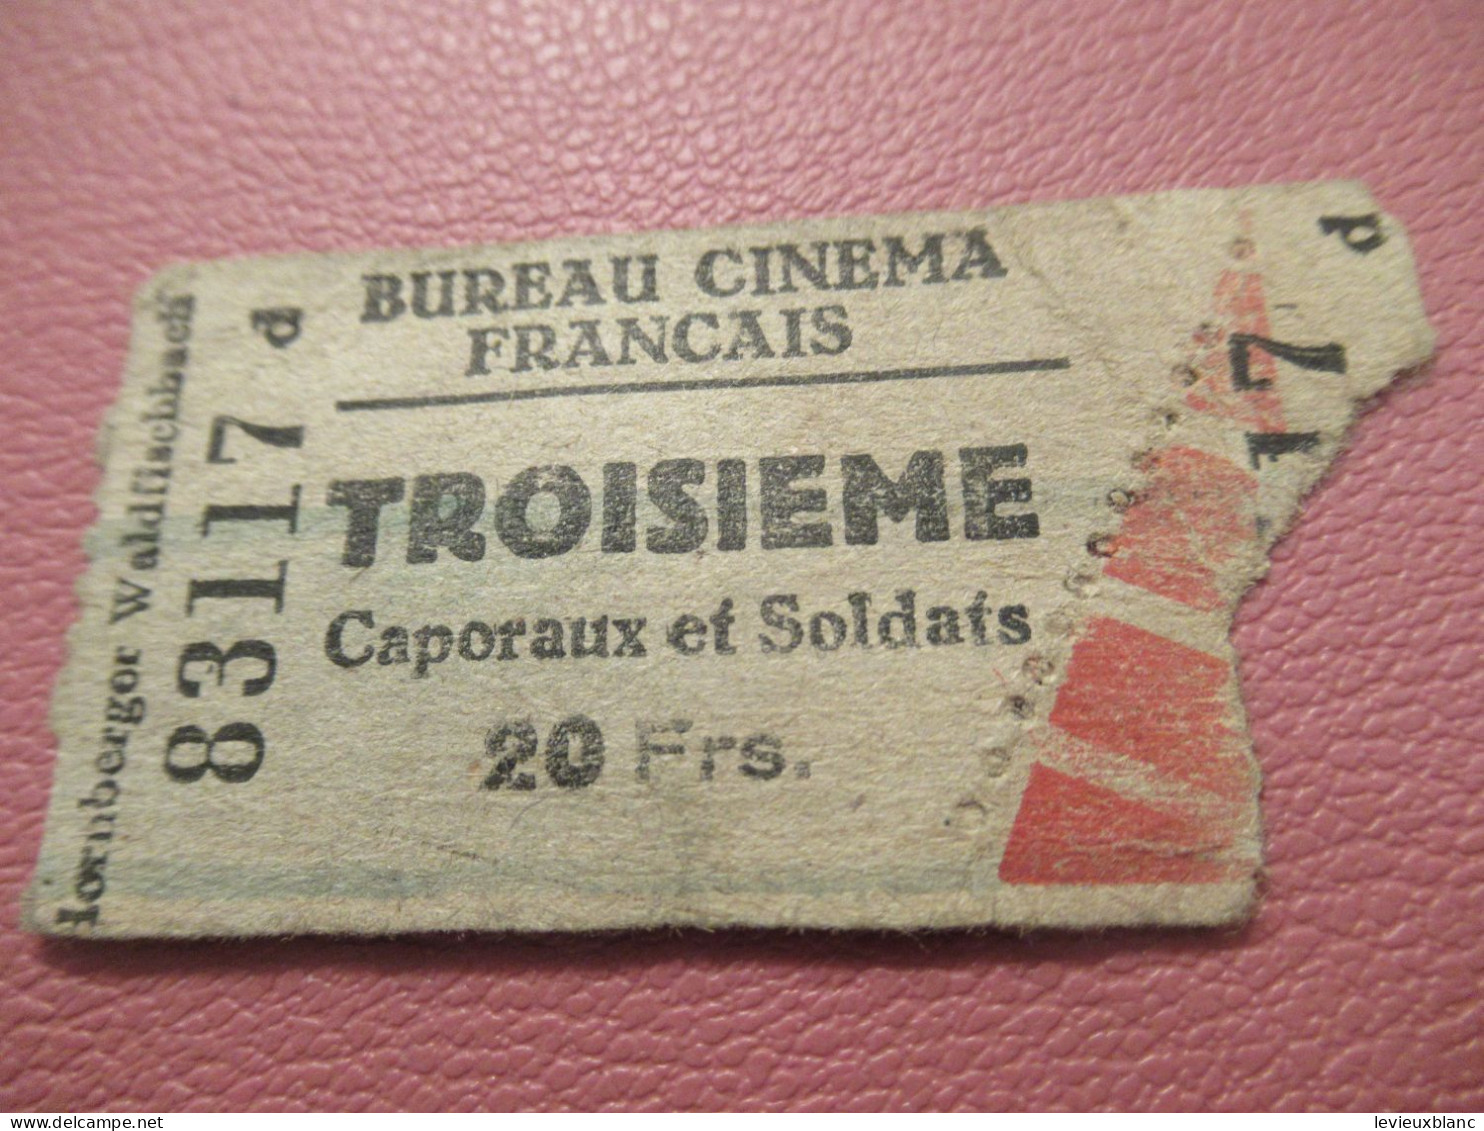 France / BUREAU CINEMA FRANCAIS/Troisième/ Caporaux Et Soldats /Lornberger Waldfischbach /1939-1945     TCK277 - Eintrittskarten